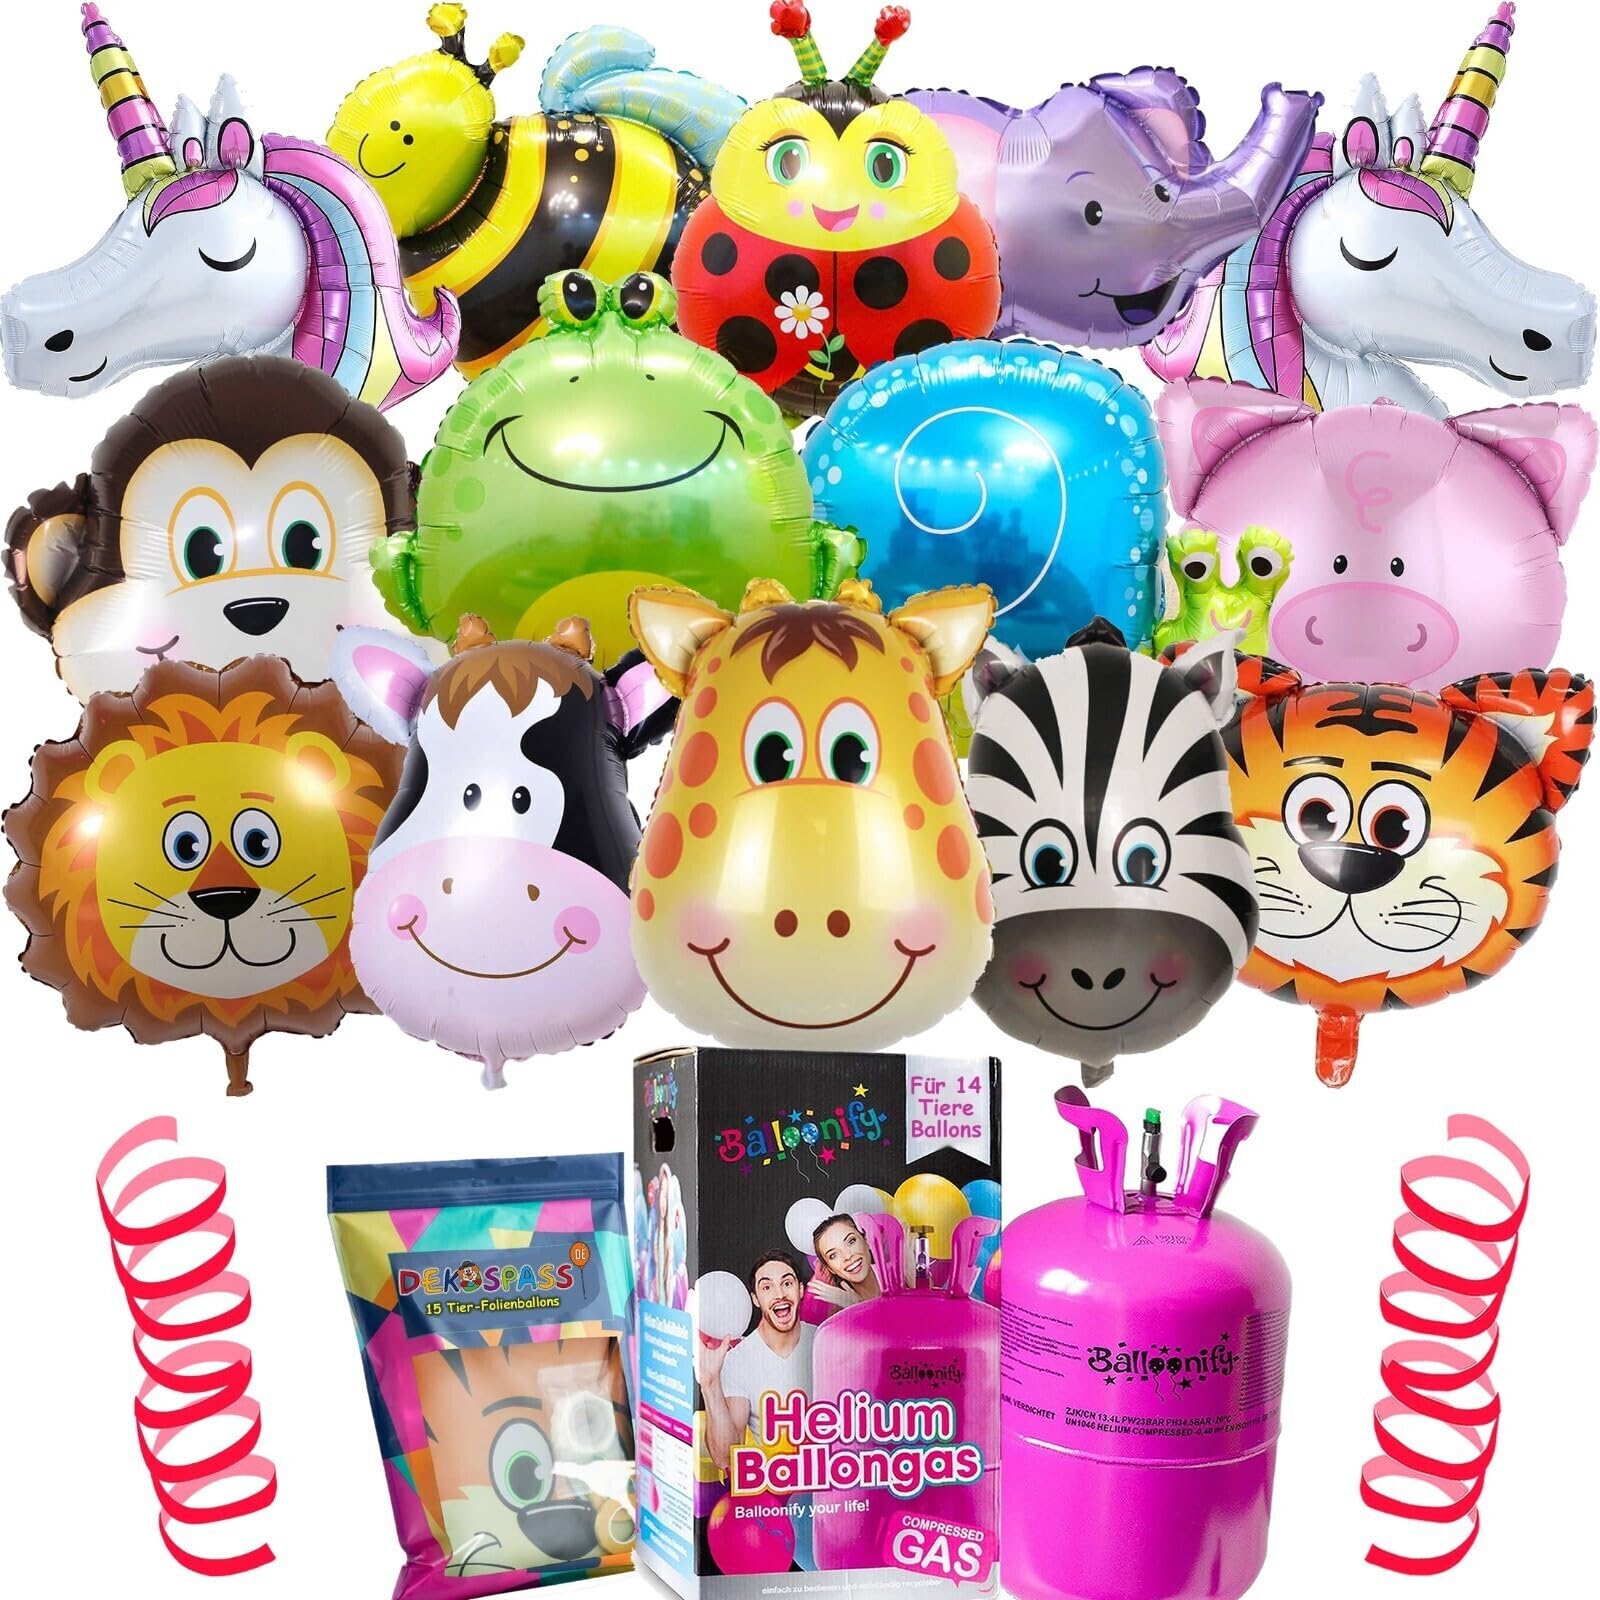 14x Tier Ballons plus Helium Ballongas Flasche | Heliumflasche Set + Knickventil + Folienballons + Folienballons | Kindergeburtstag Deko Zoo Party, Edition: 14 Tier Ballons + Helium Gasflasche